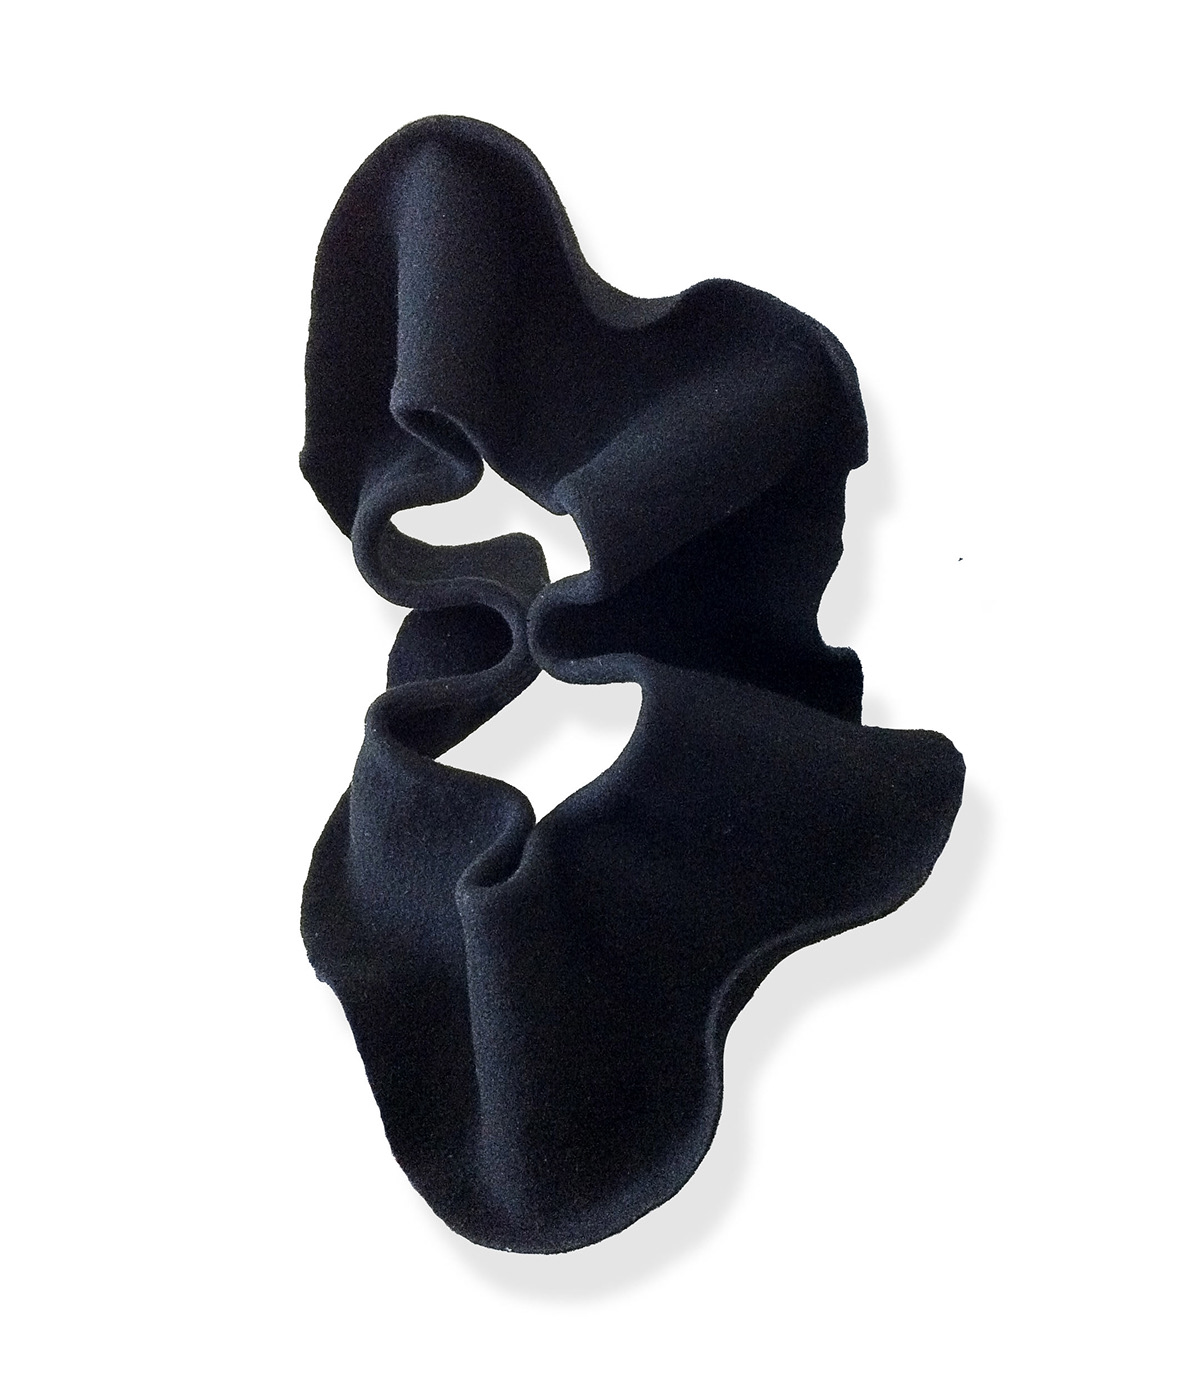 felt black millinery hat fabric fabric manipulation sculpture flower wave